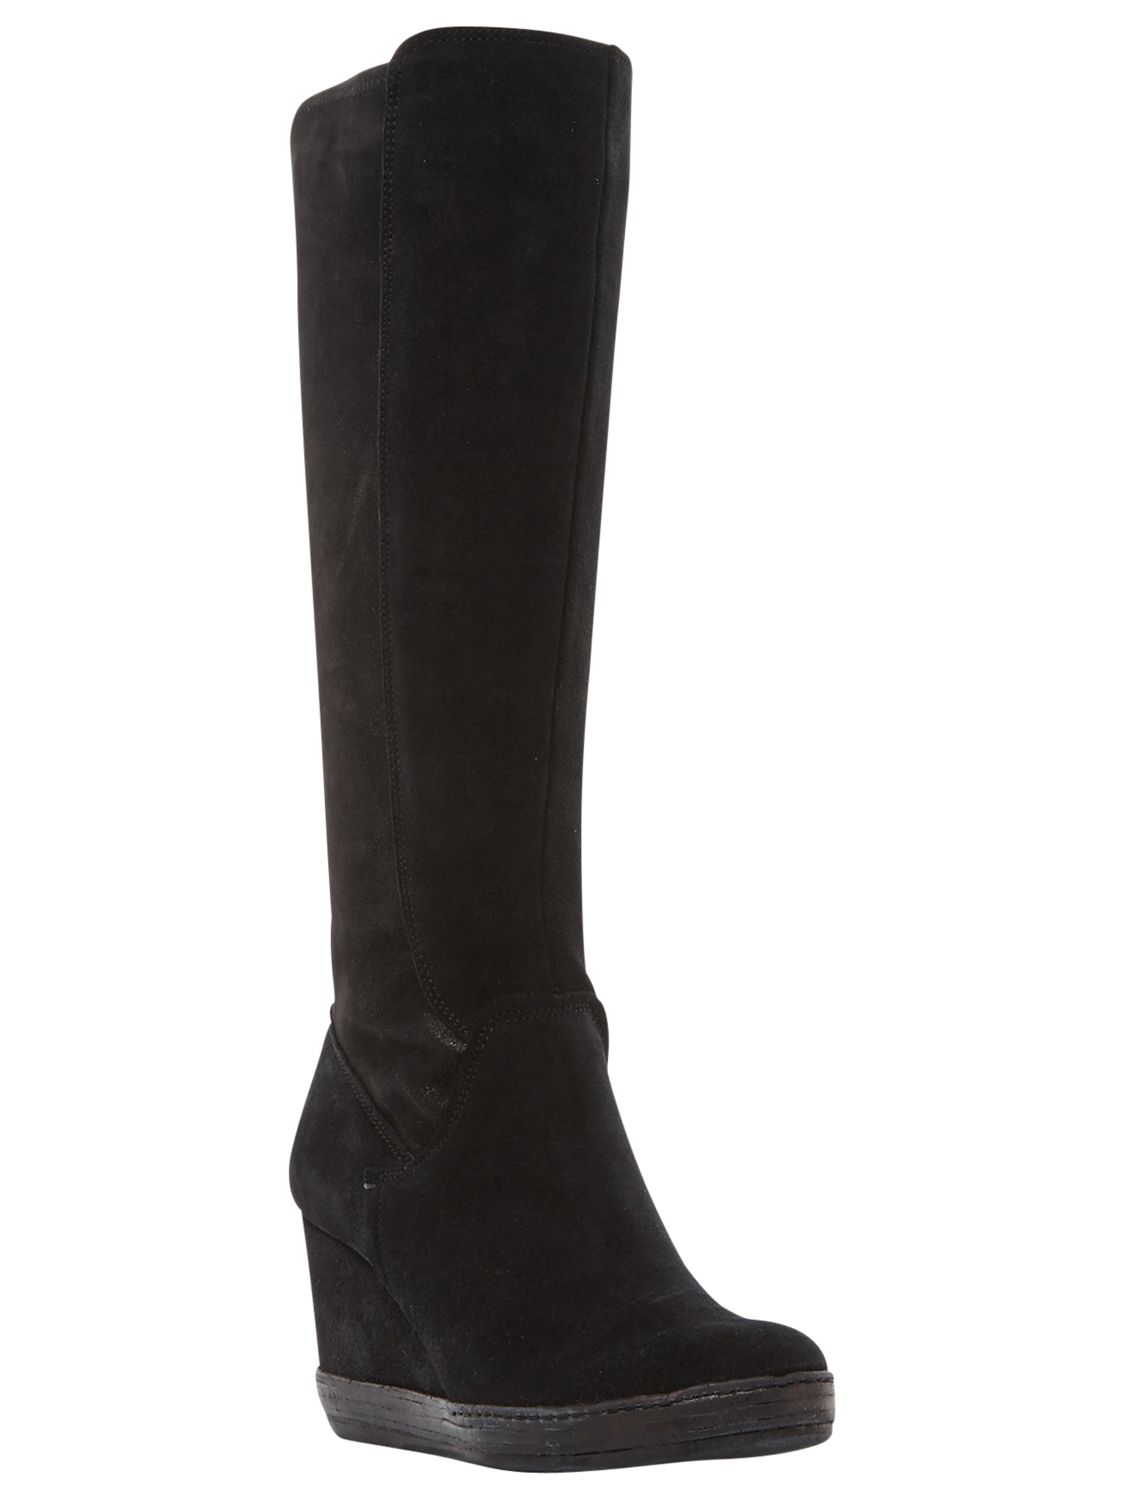 Dune Vera Wedge Heeled Knee High Boots, Black, 5